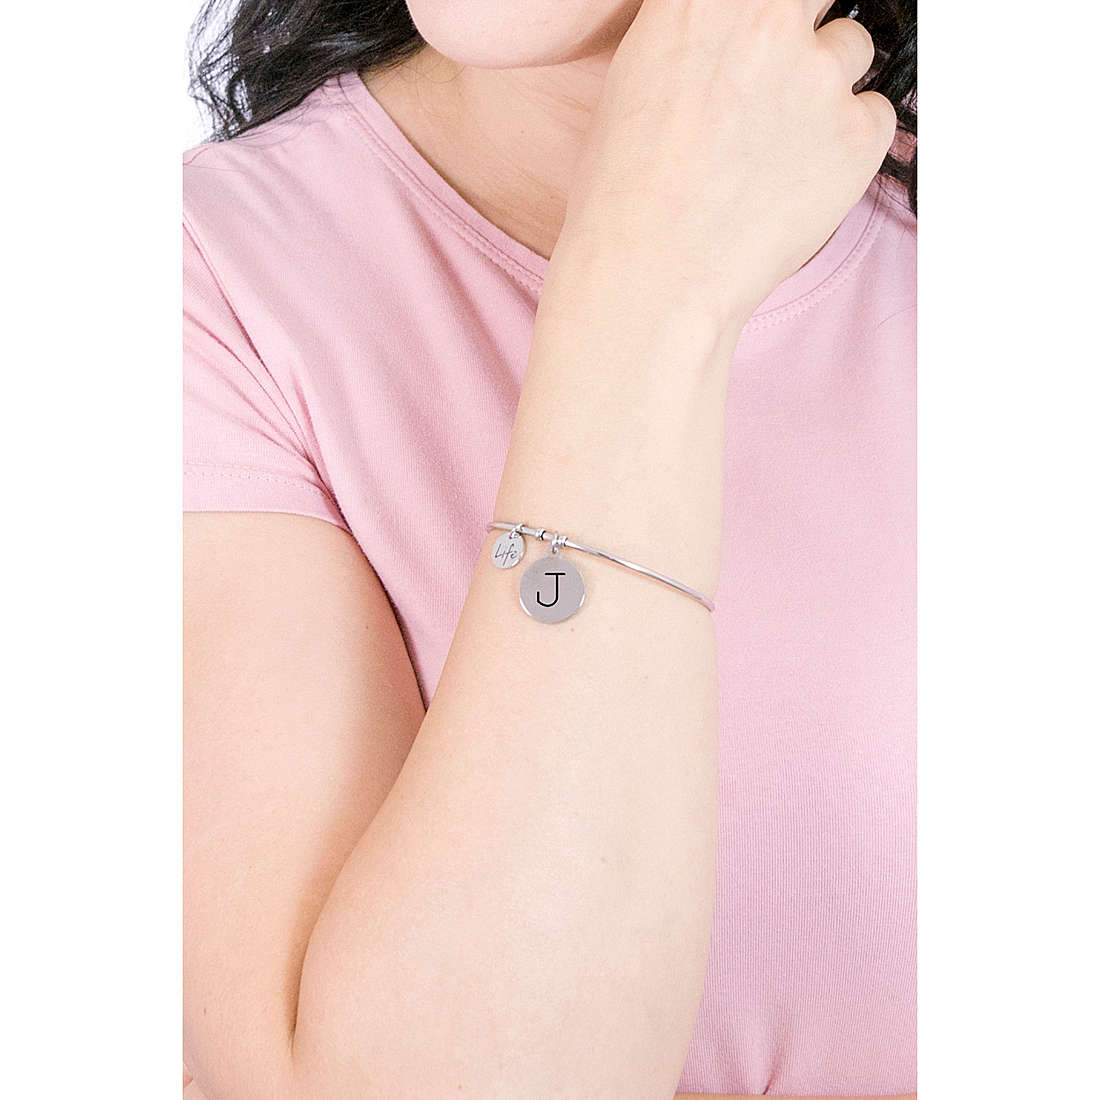 Kidult bracelets Symbols woman 231555j wearing